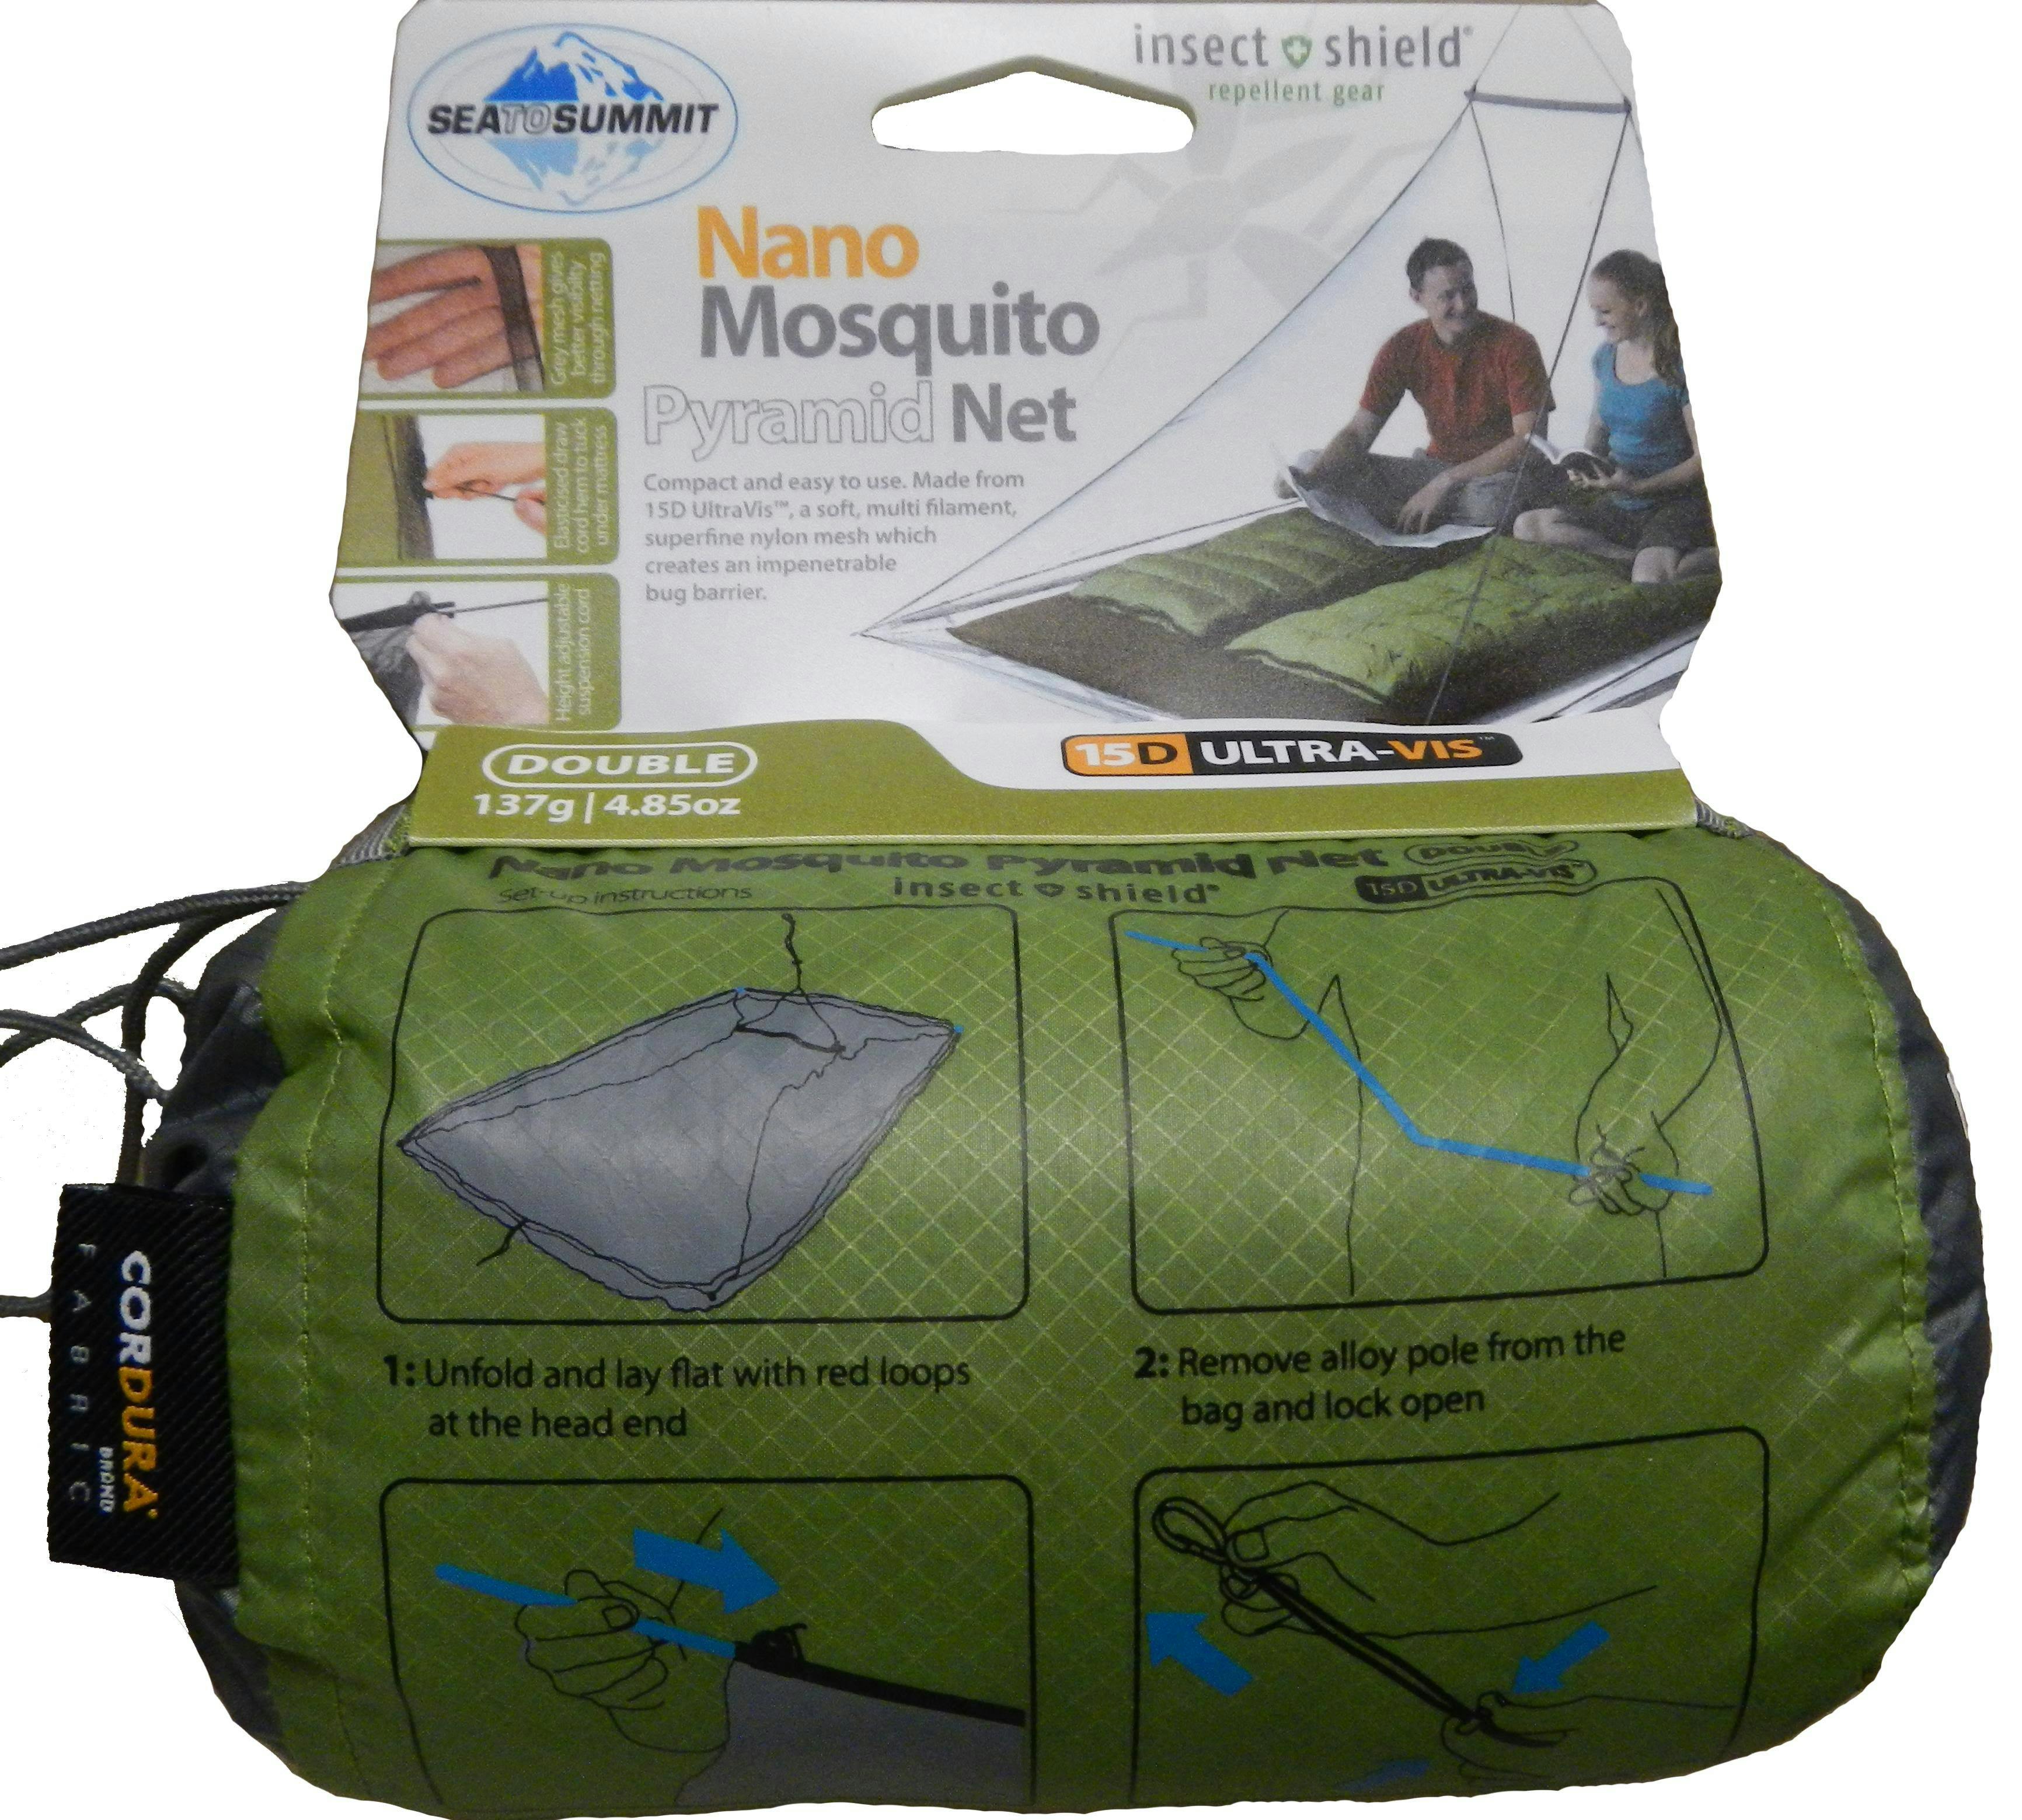 Sea to Summit Nano Mosquito Pyramid Net Shelter Insect Shield Single